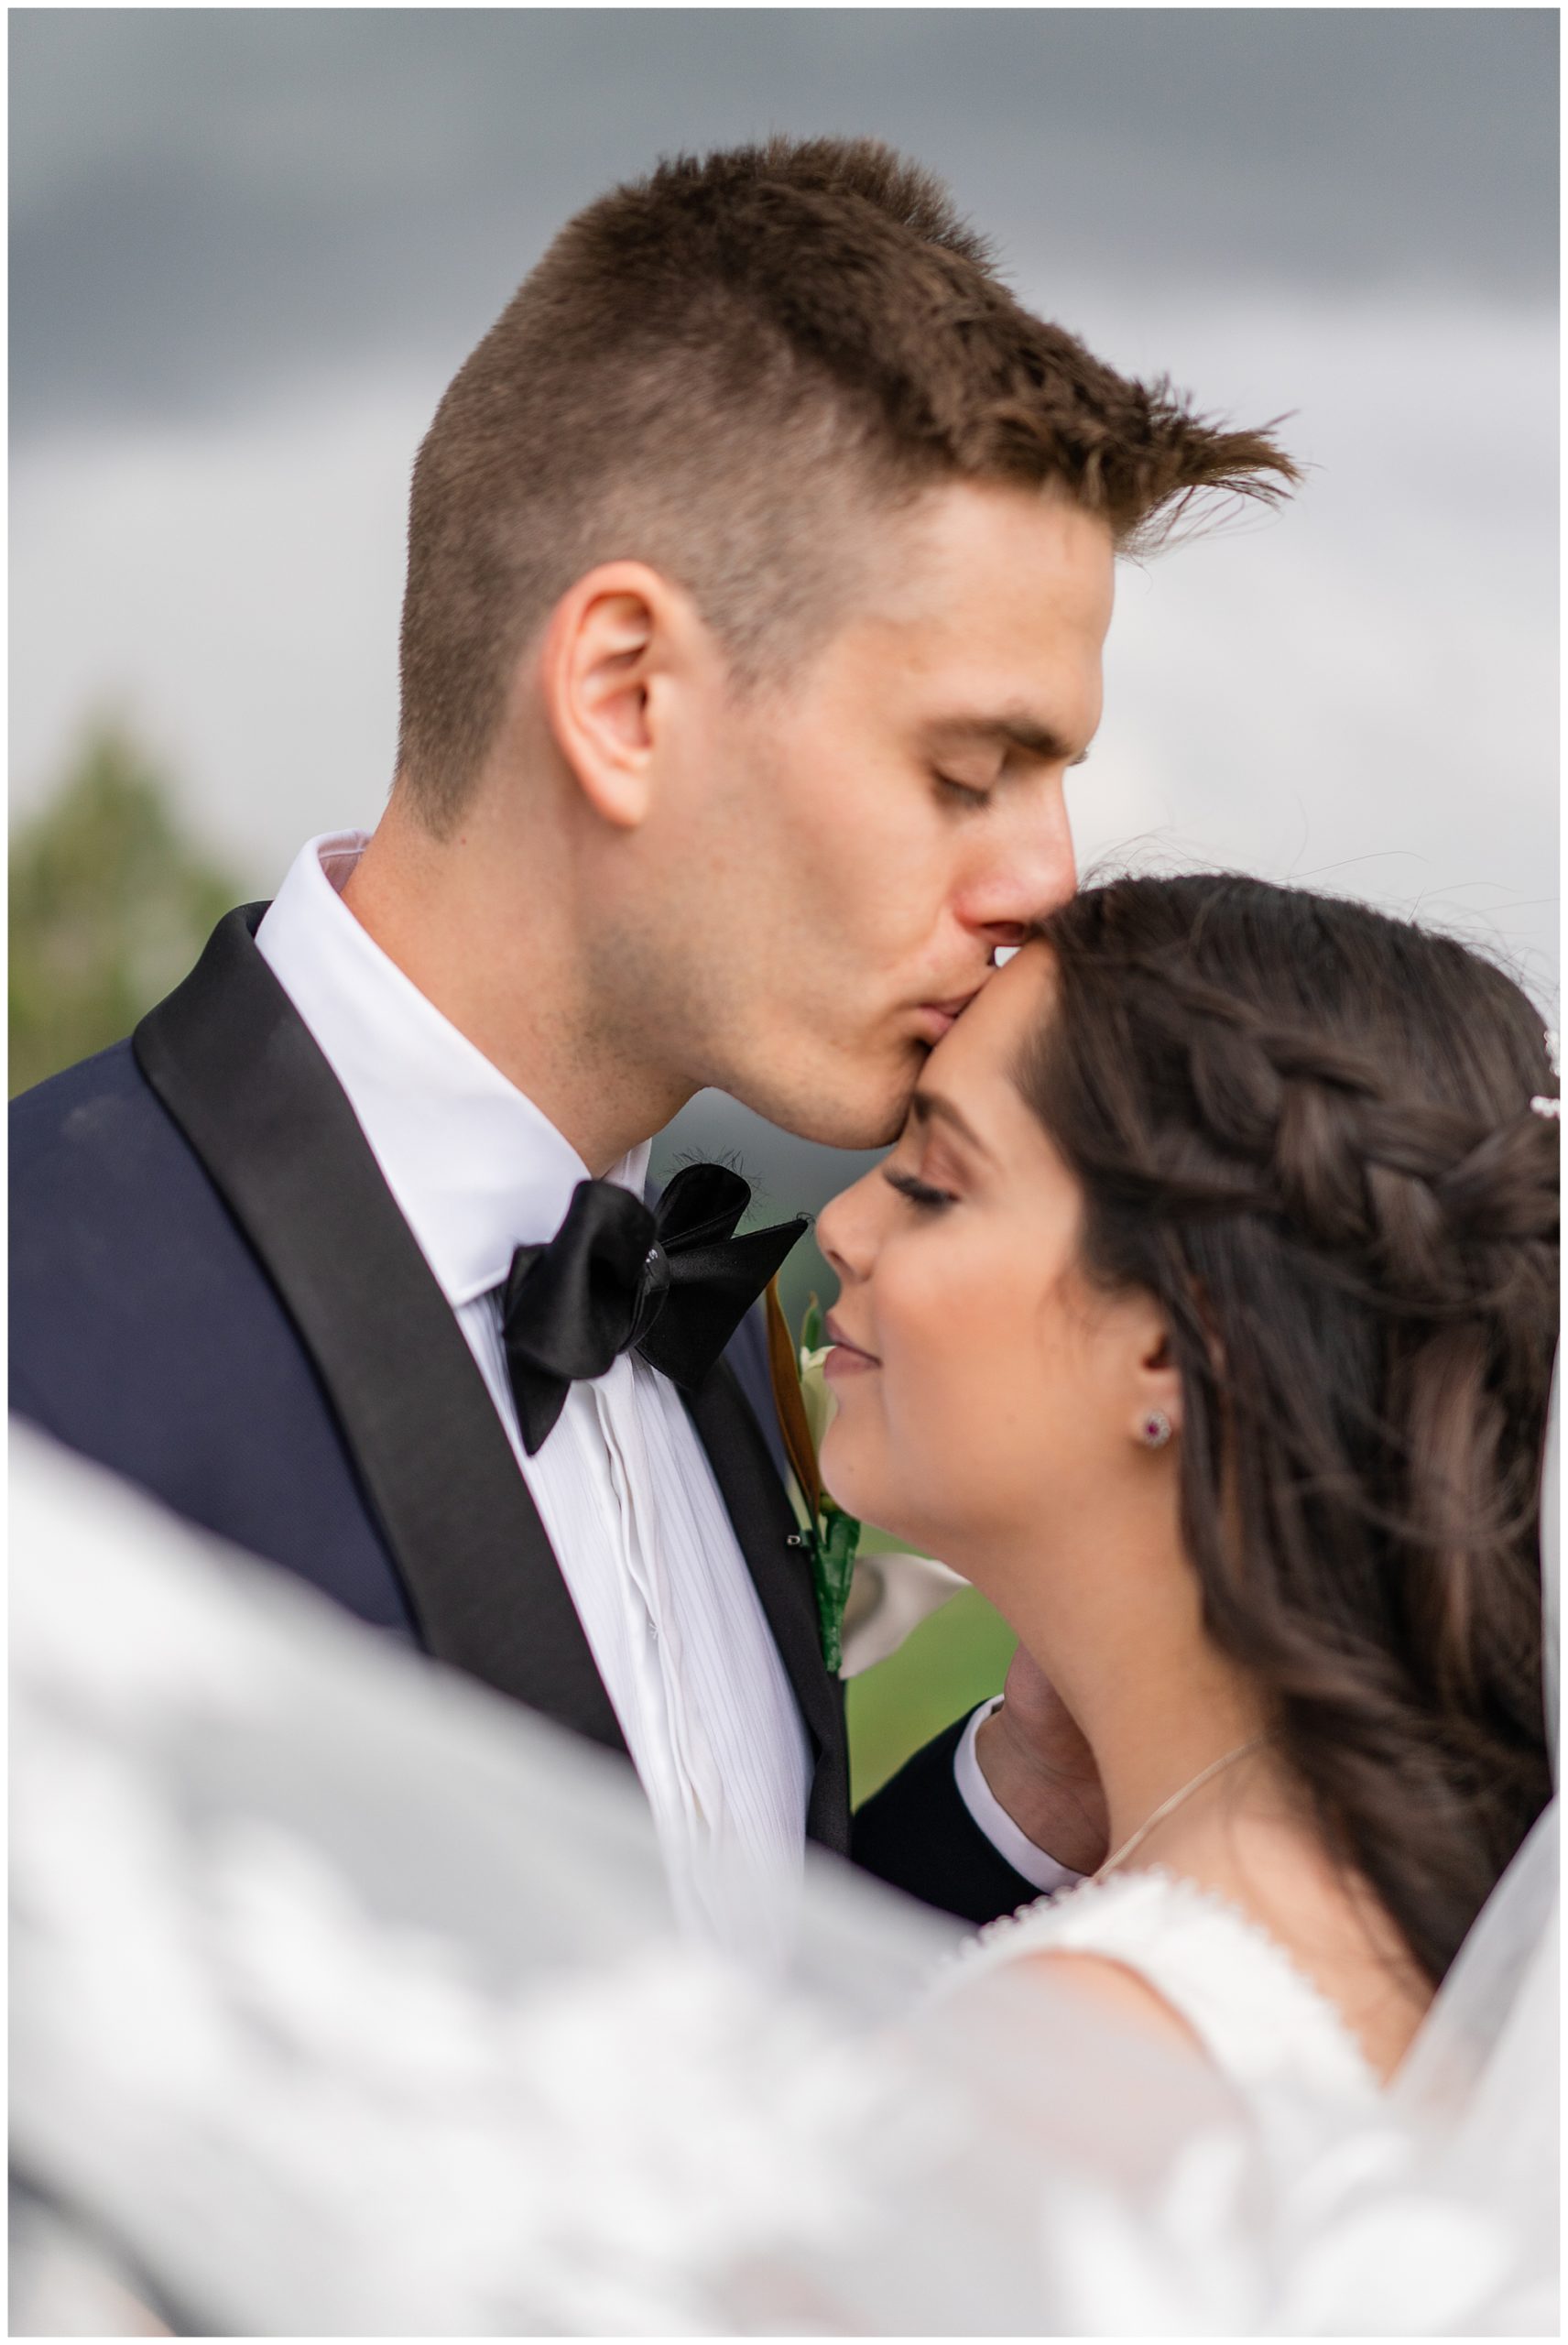 Groom kissing bride on her forehead at their wedding | Australian wedding photographer